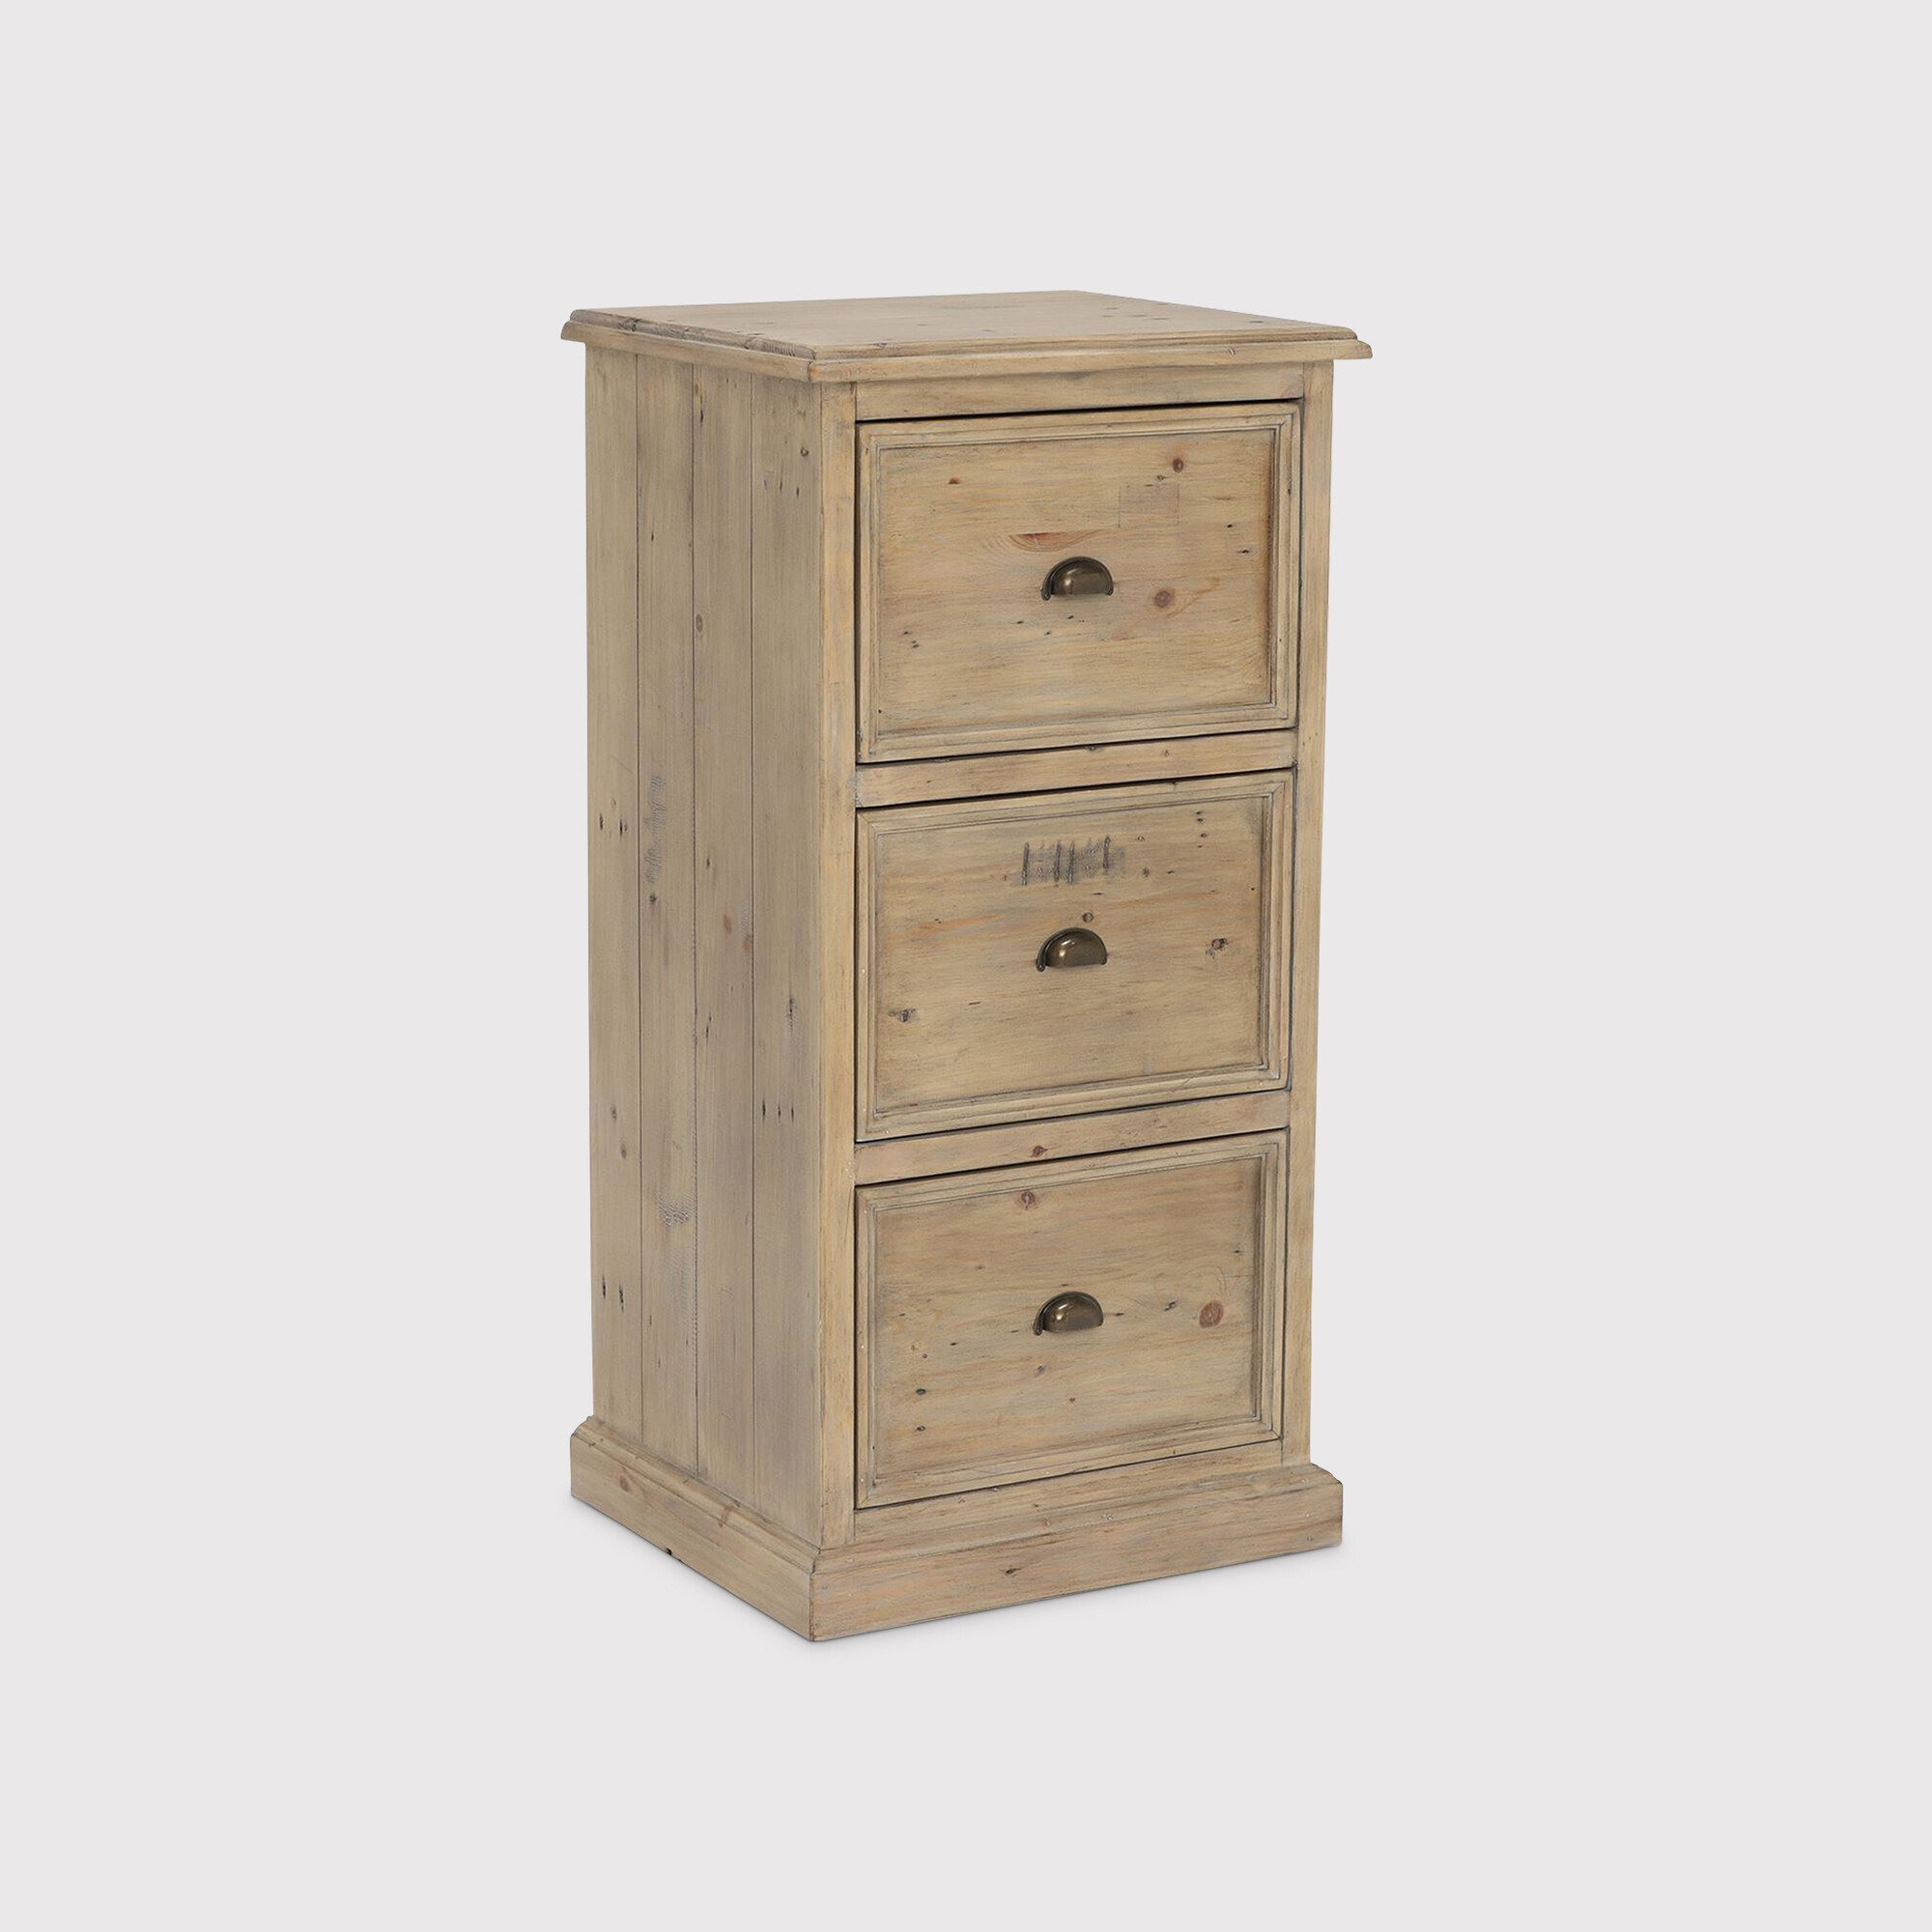 Verberie 3 Drawer Filing Cabinet, Neutral Wood - Barker & Stonehouse - image 1